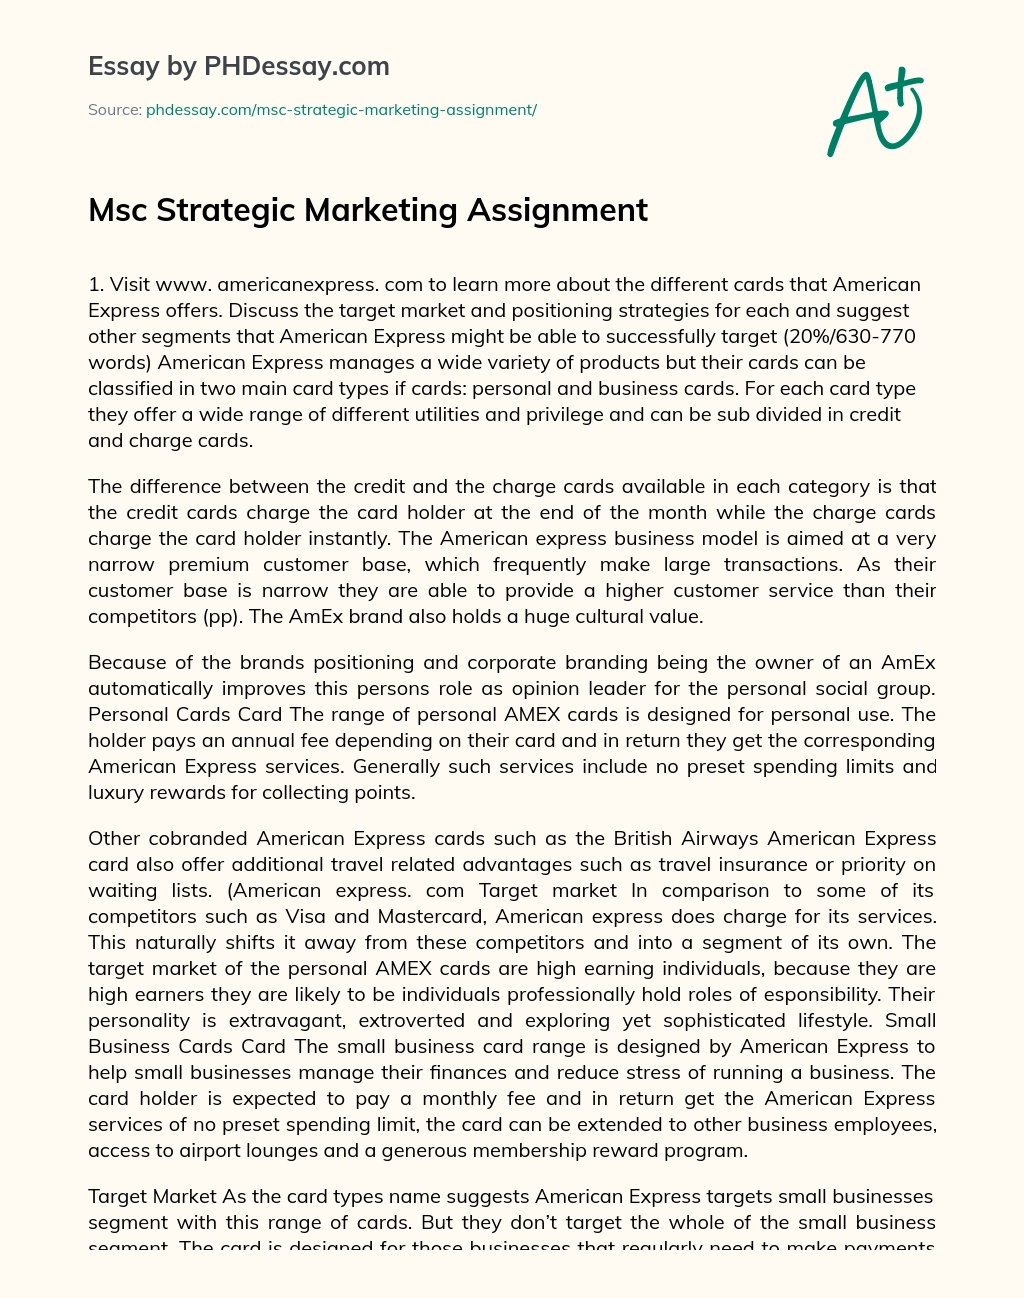 Msc Strategic Marketing Assignment essay